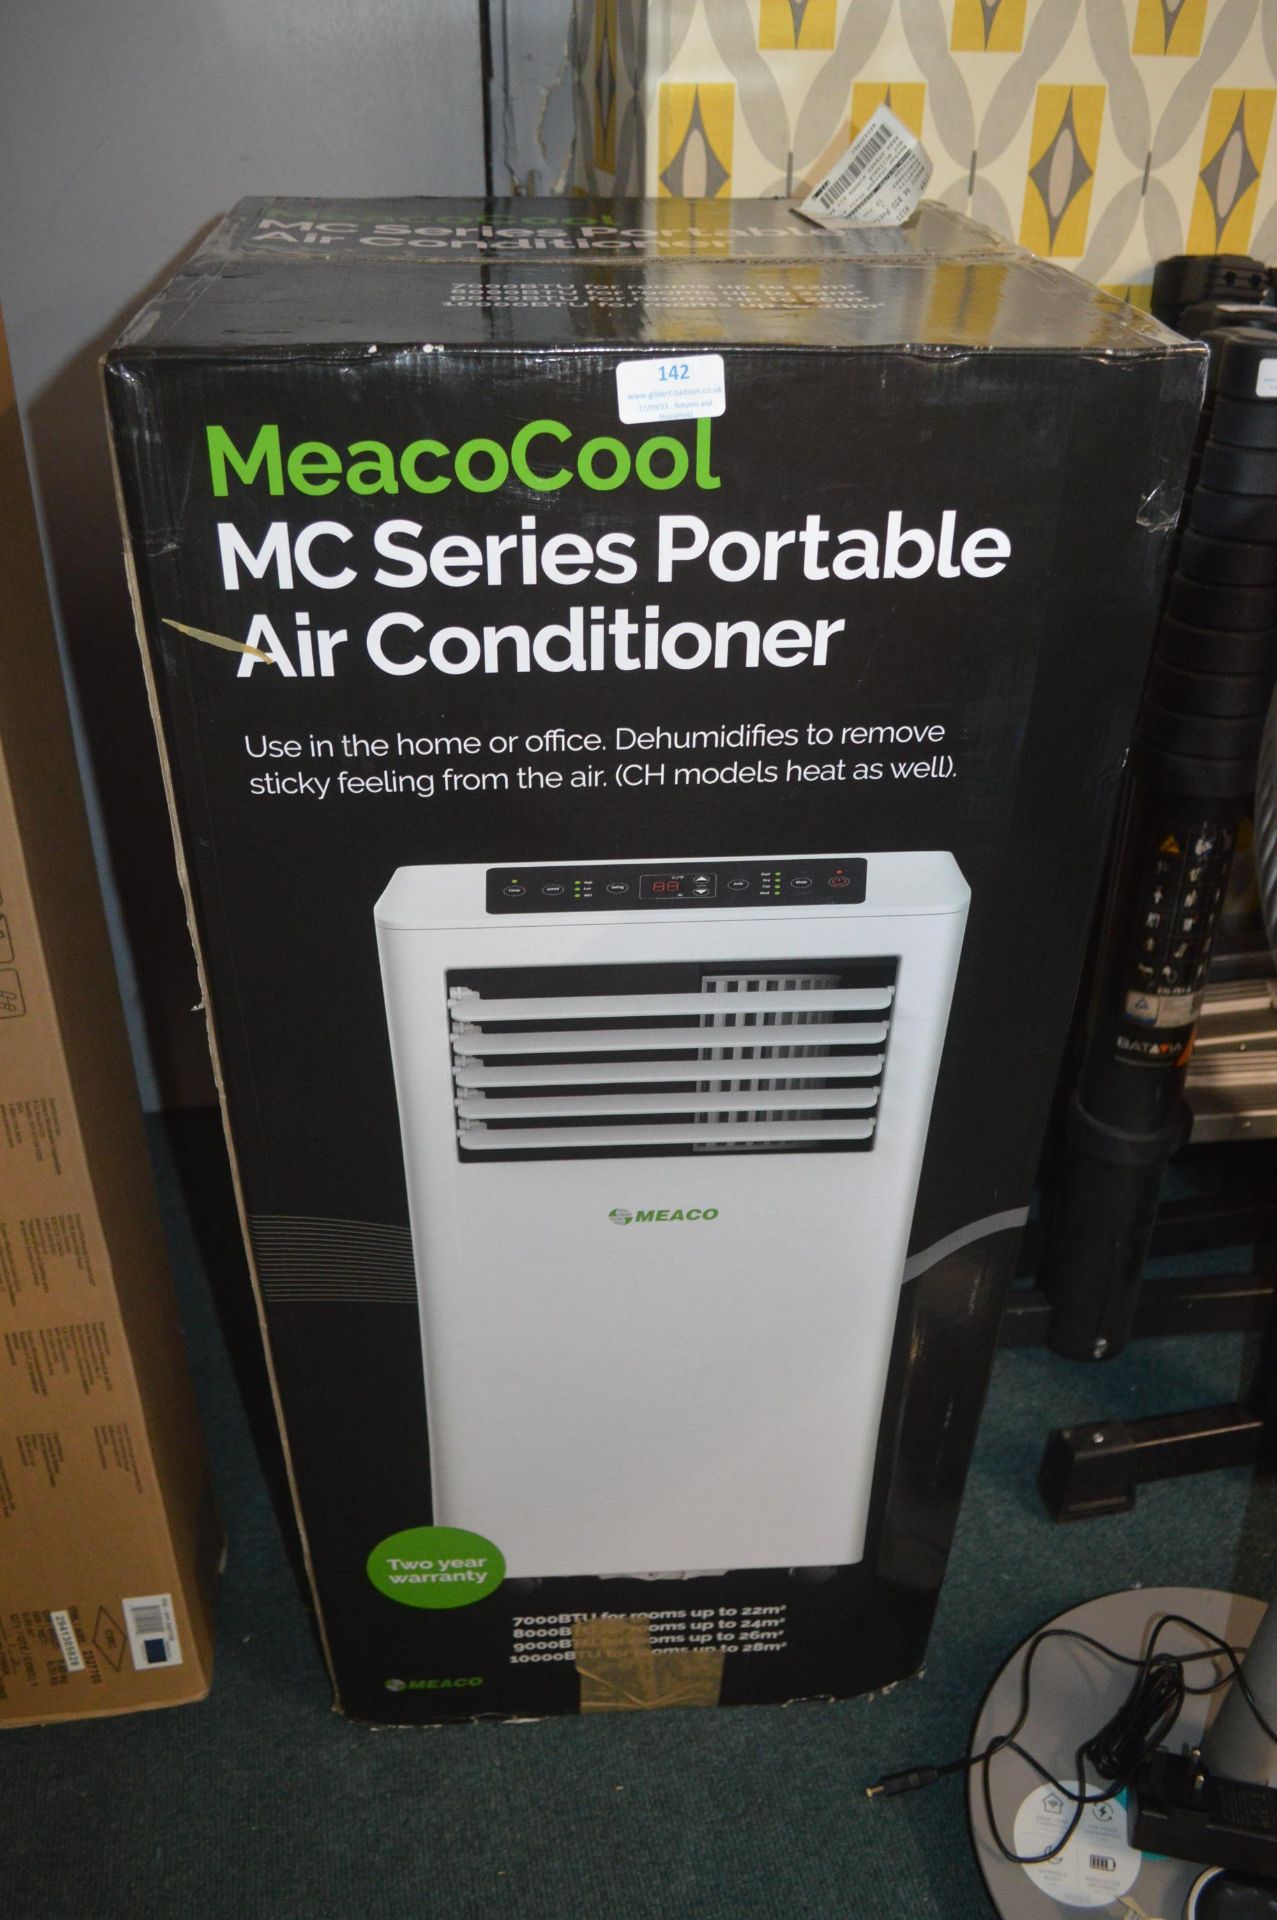 *Meaco Cool Portable Air Conditioner